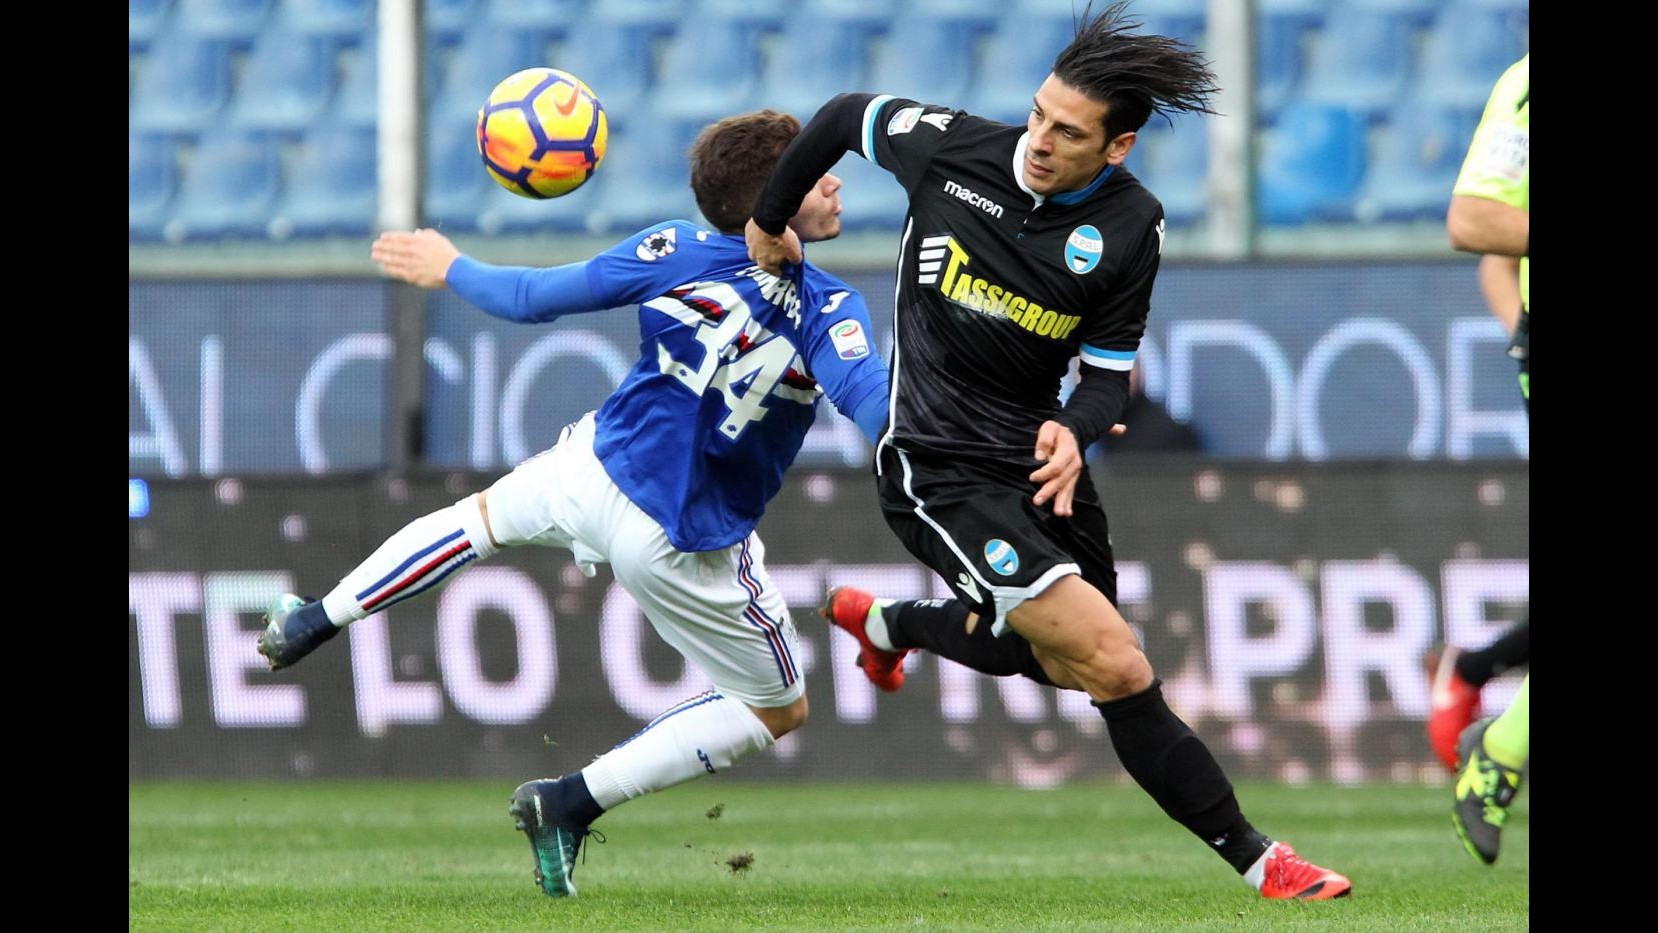 Serie A, Sampdoria-Spal 2-0 | IL FOTORACCONTO